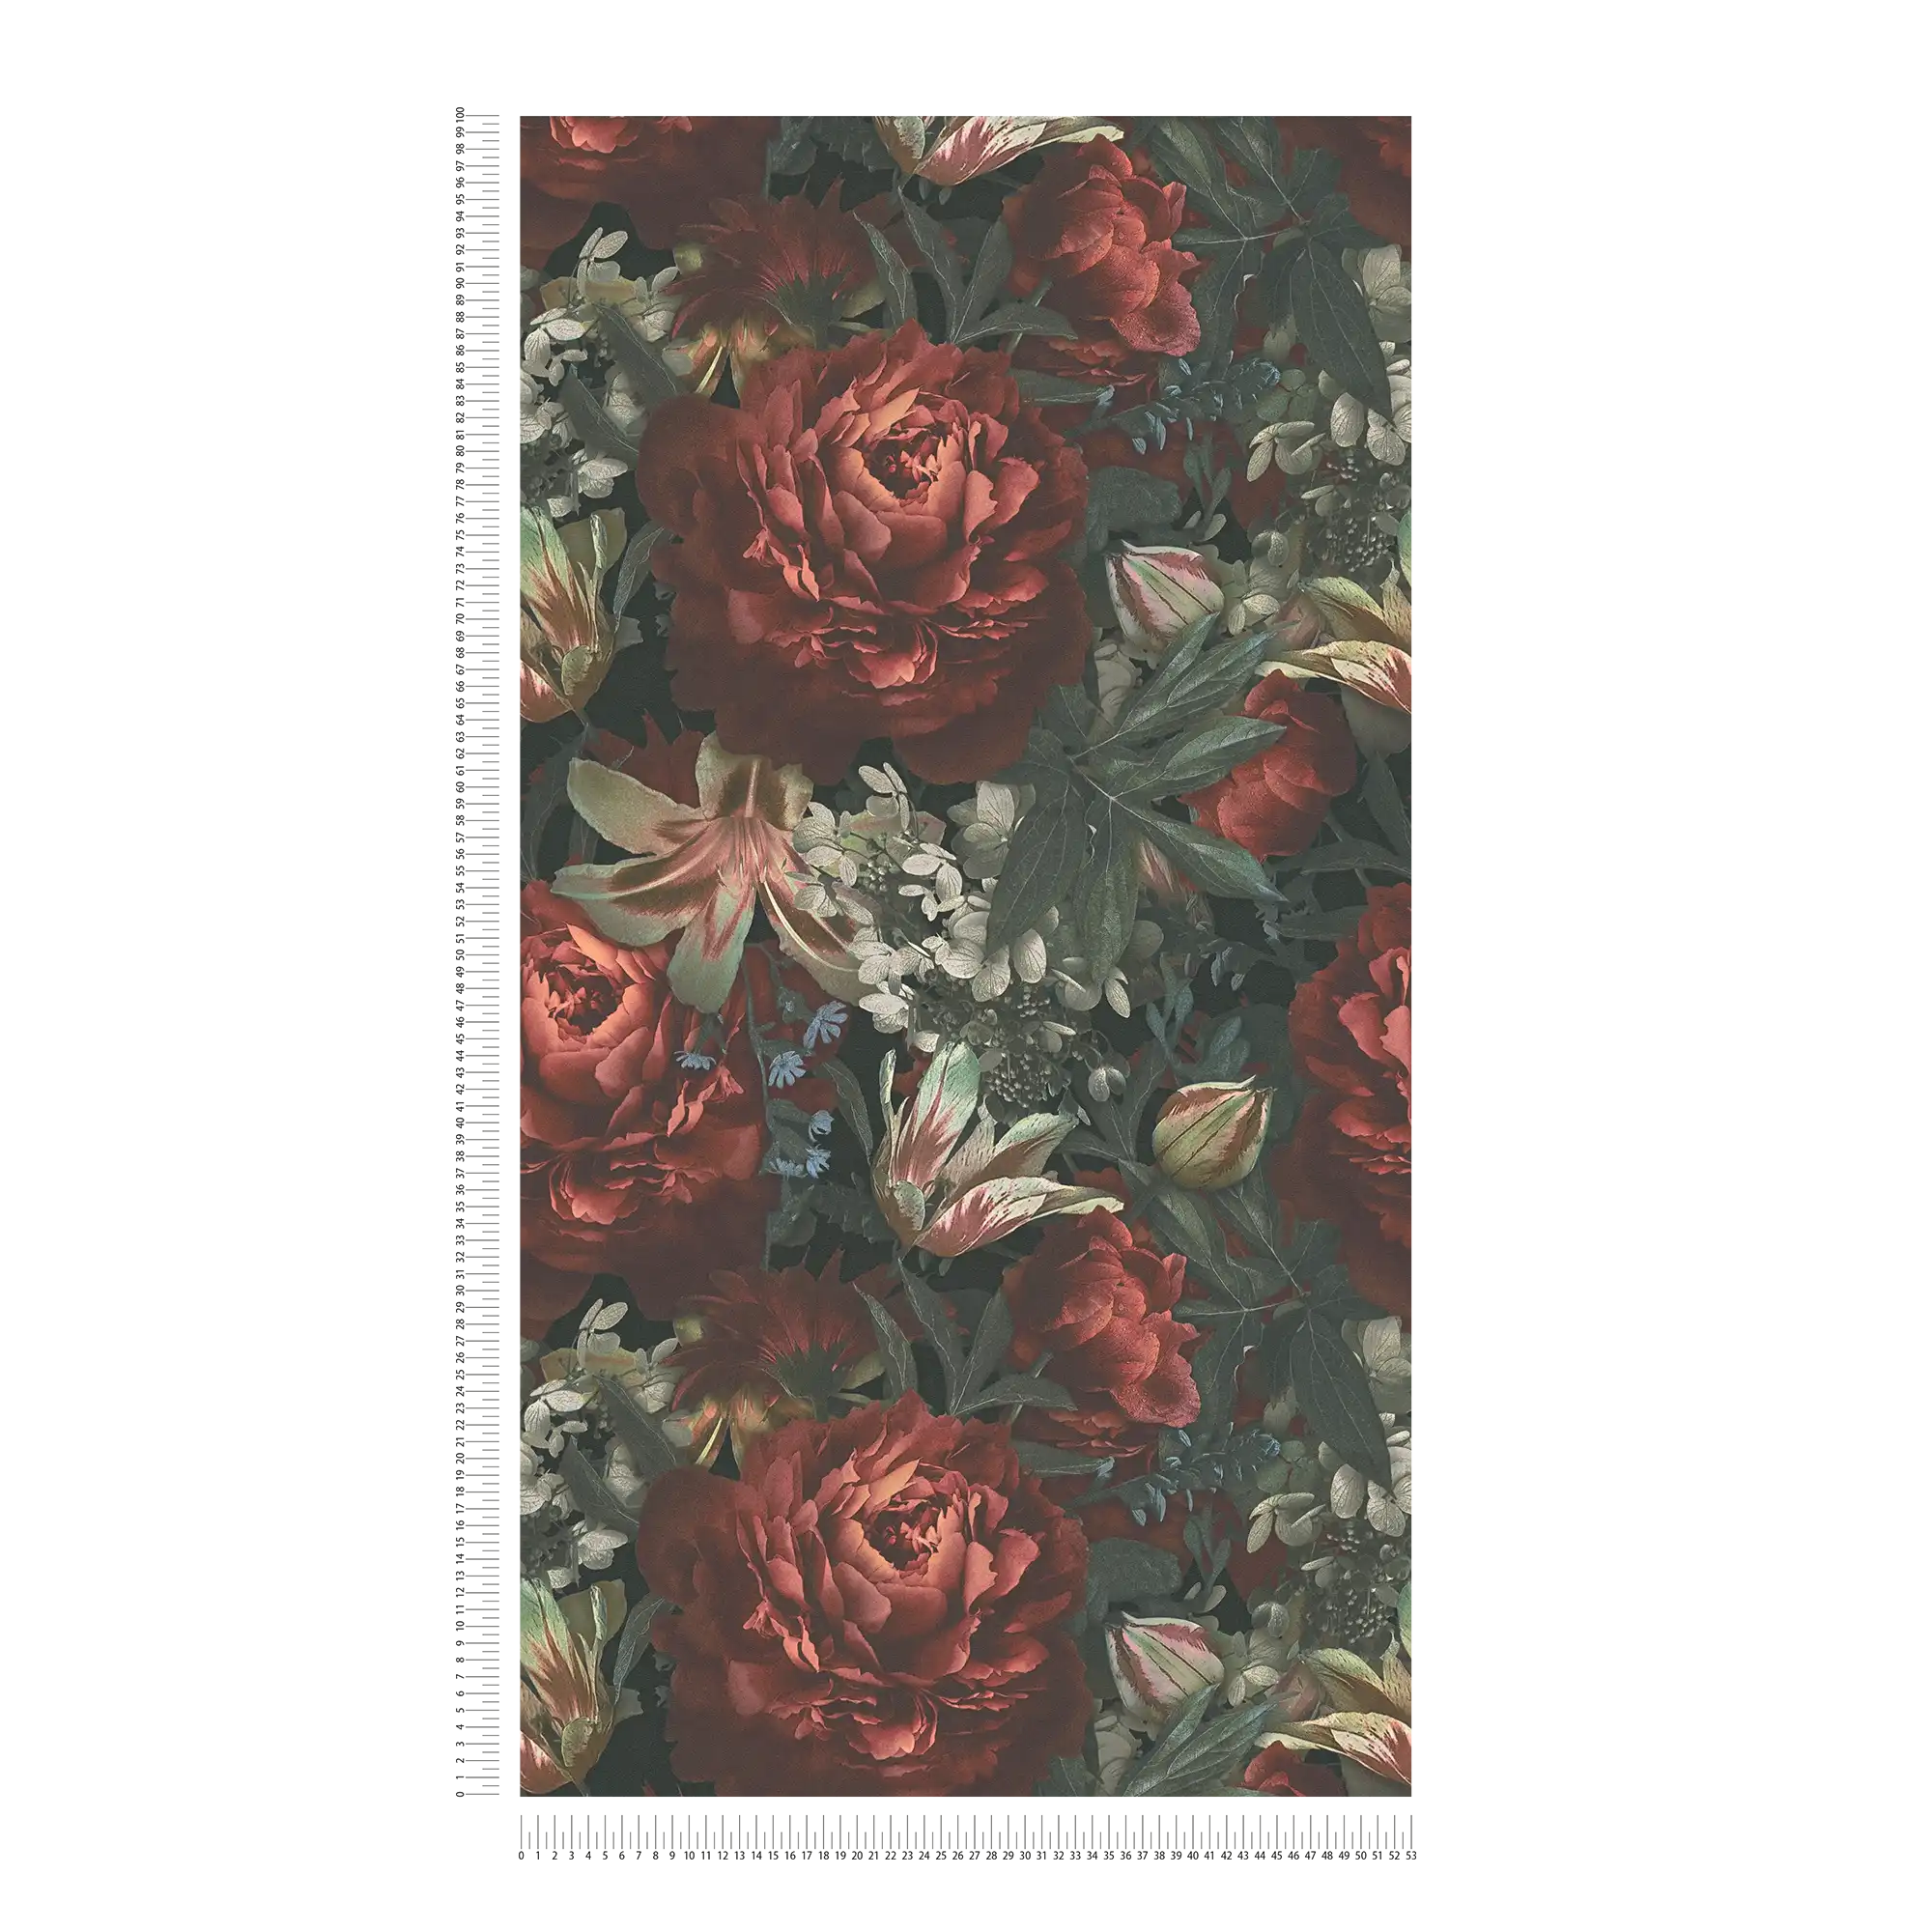             Bloemenbehang rozen & tulpen vintage stijl - groen, rood, crème
        